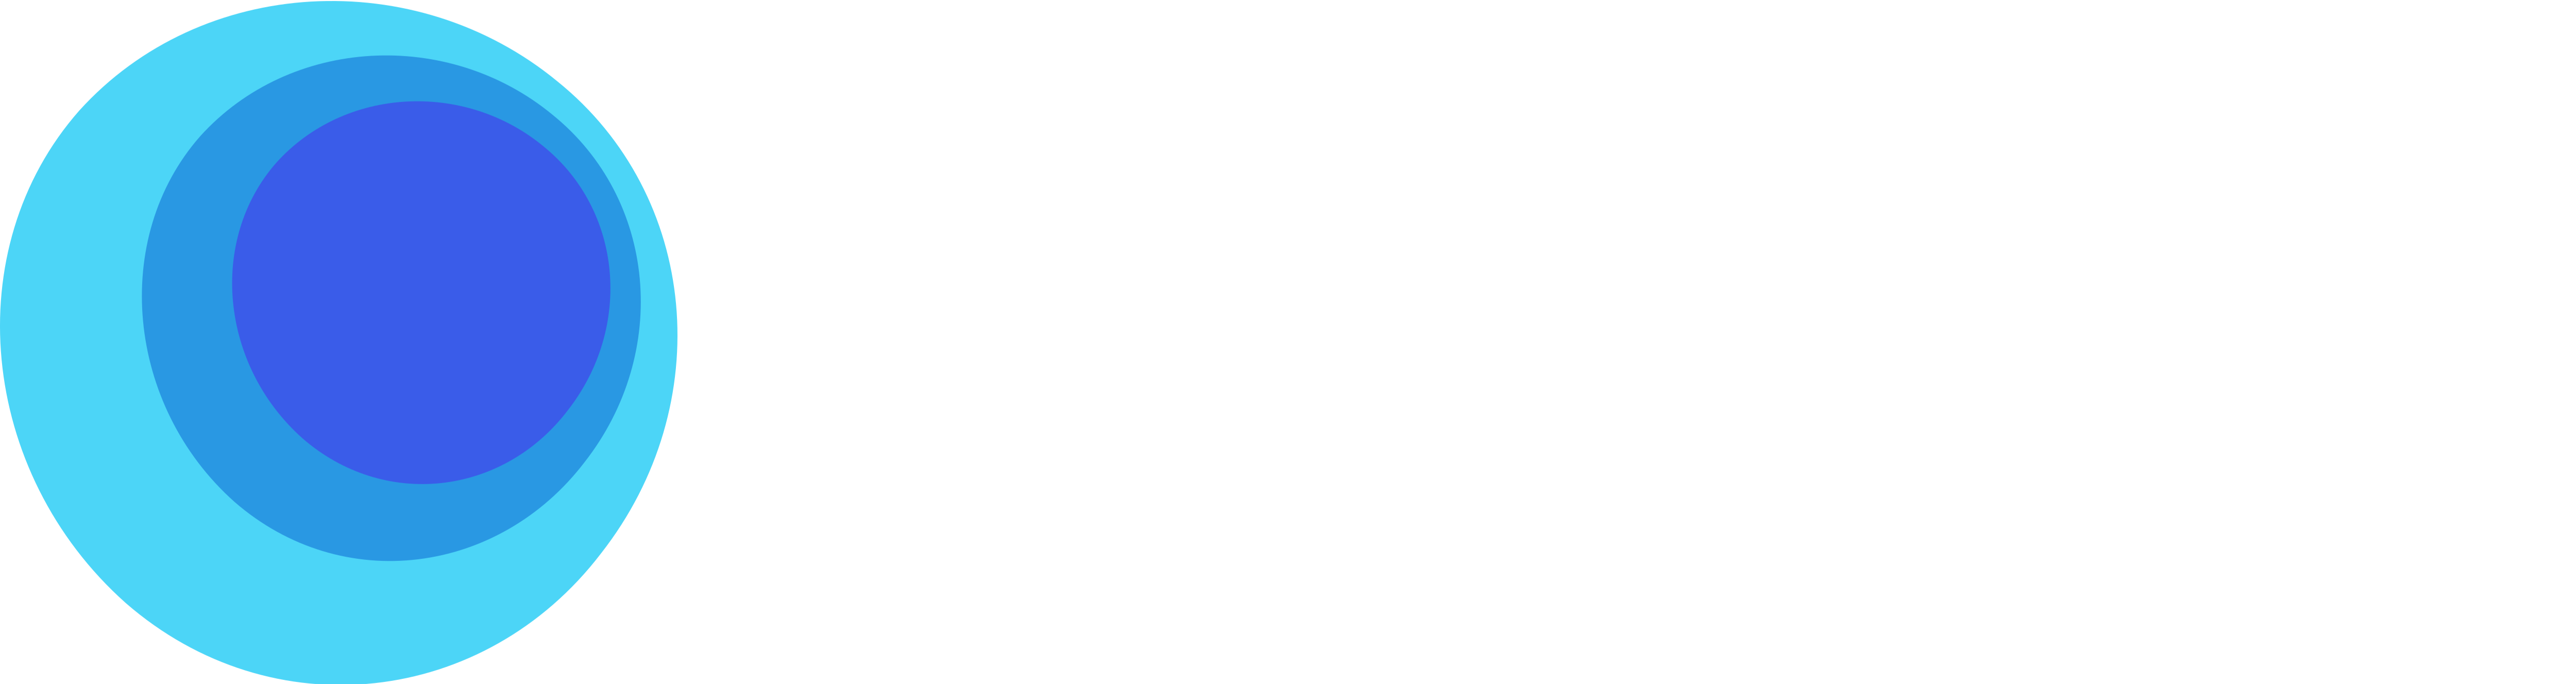 Laboratory Corporation of America Holdings logo